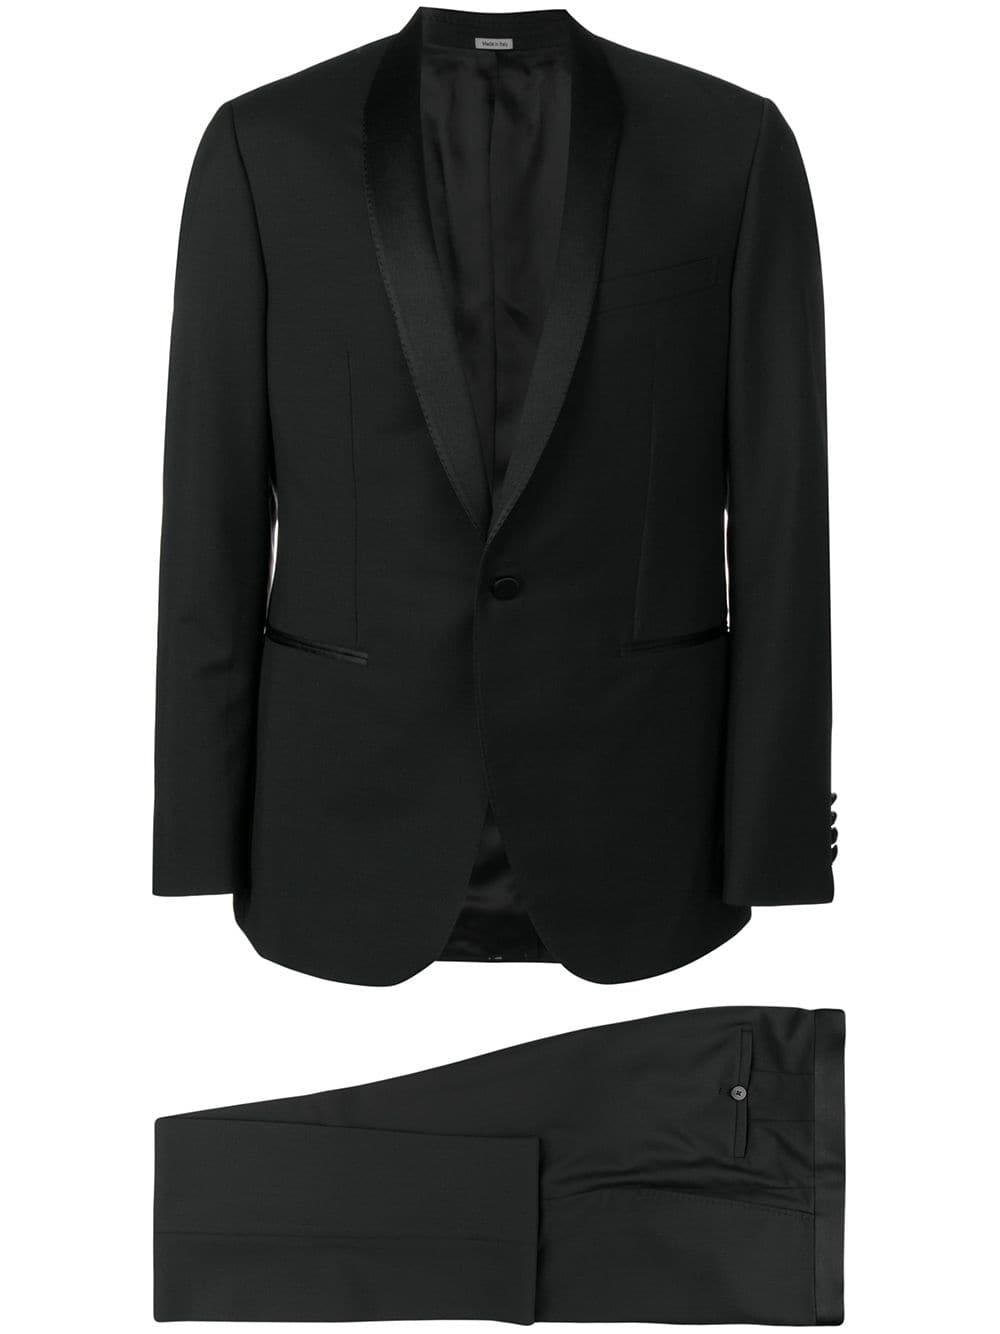 Lanvin Wool Two Piece Dinner Suit in Black for Men - Lyst